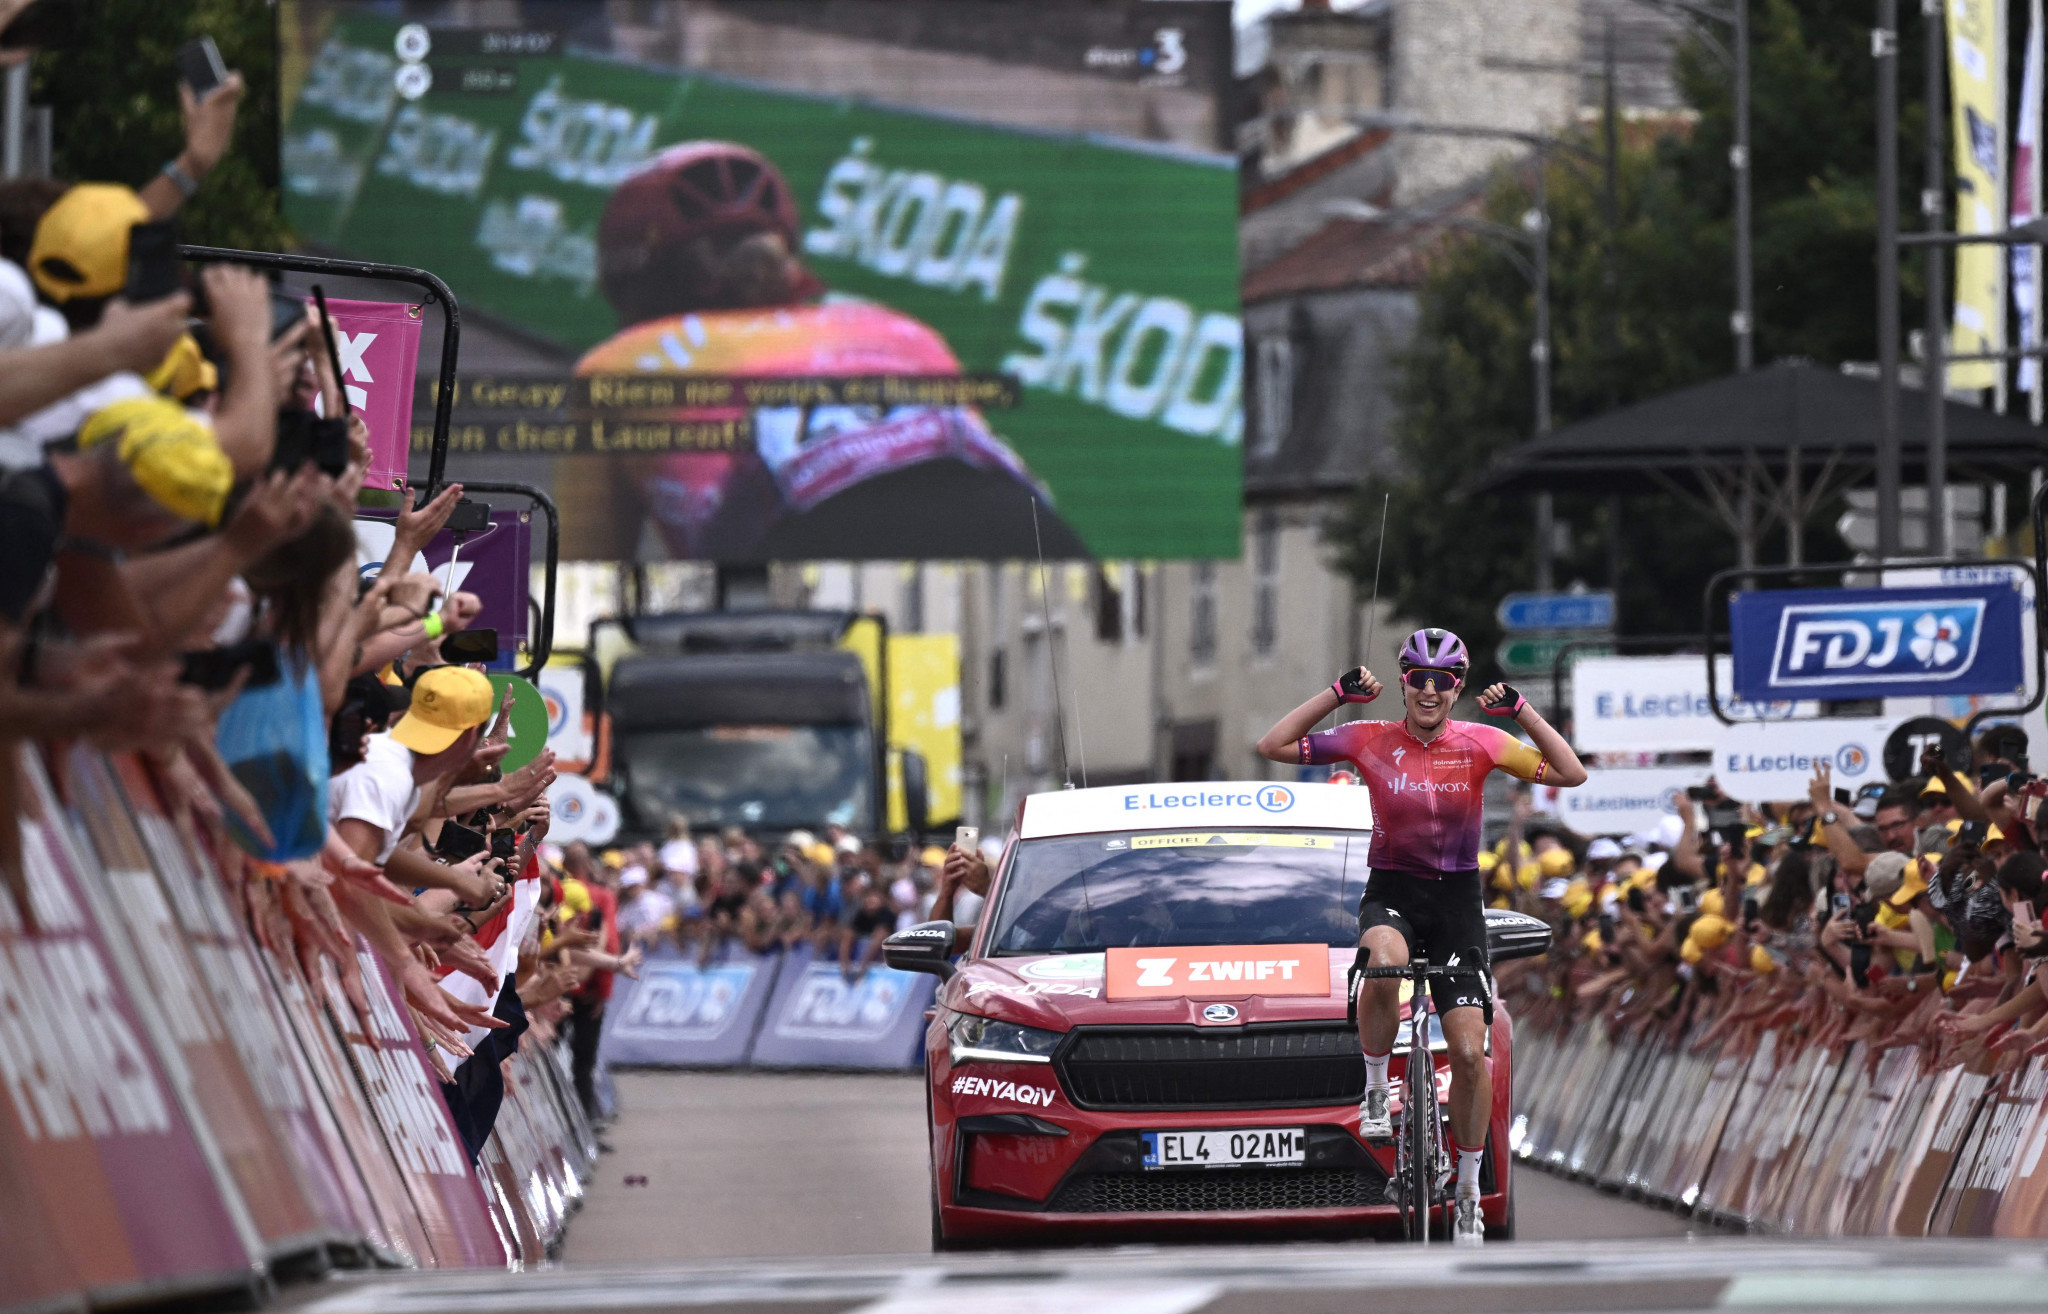 Reusser breaks clear to clinch stage four victory on Tour de France Femmes